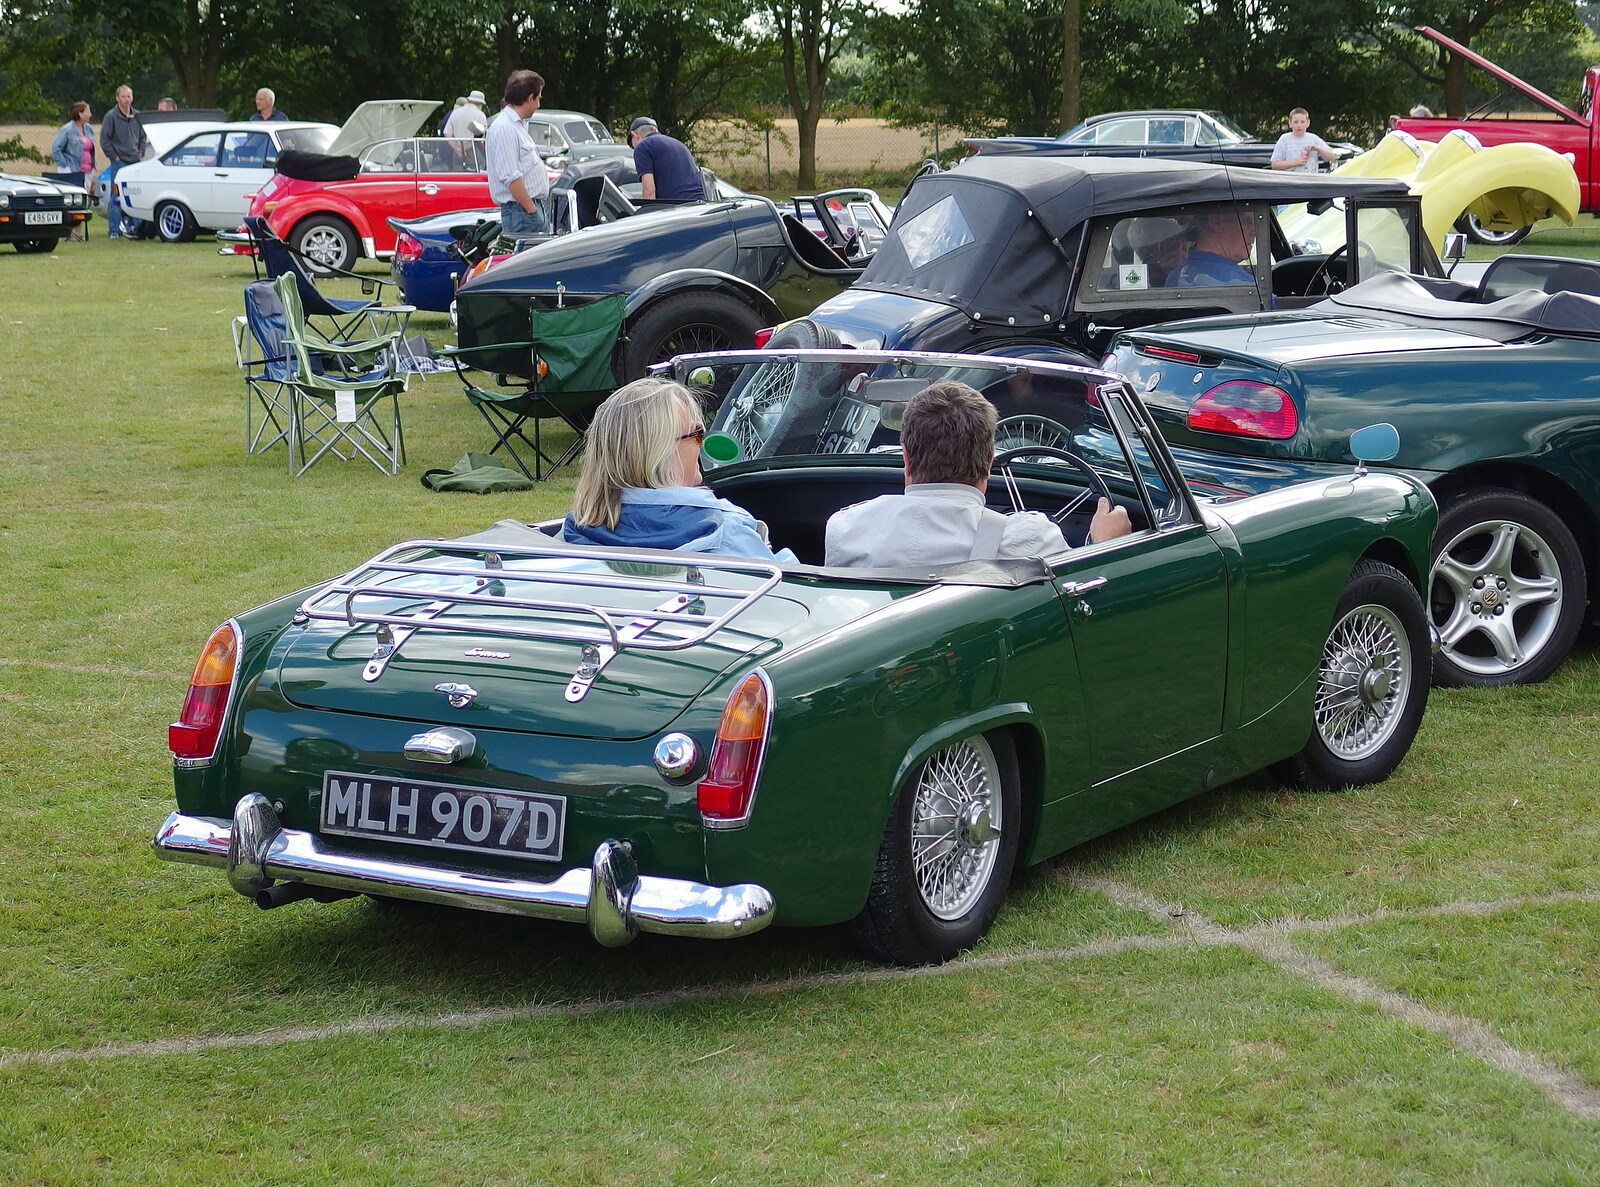 A nice green MG roadster from Stradbroke Classic Car Show, Stradbroke, Suffolk - 7th September 2013